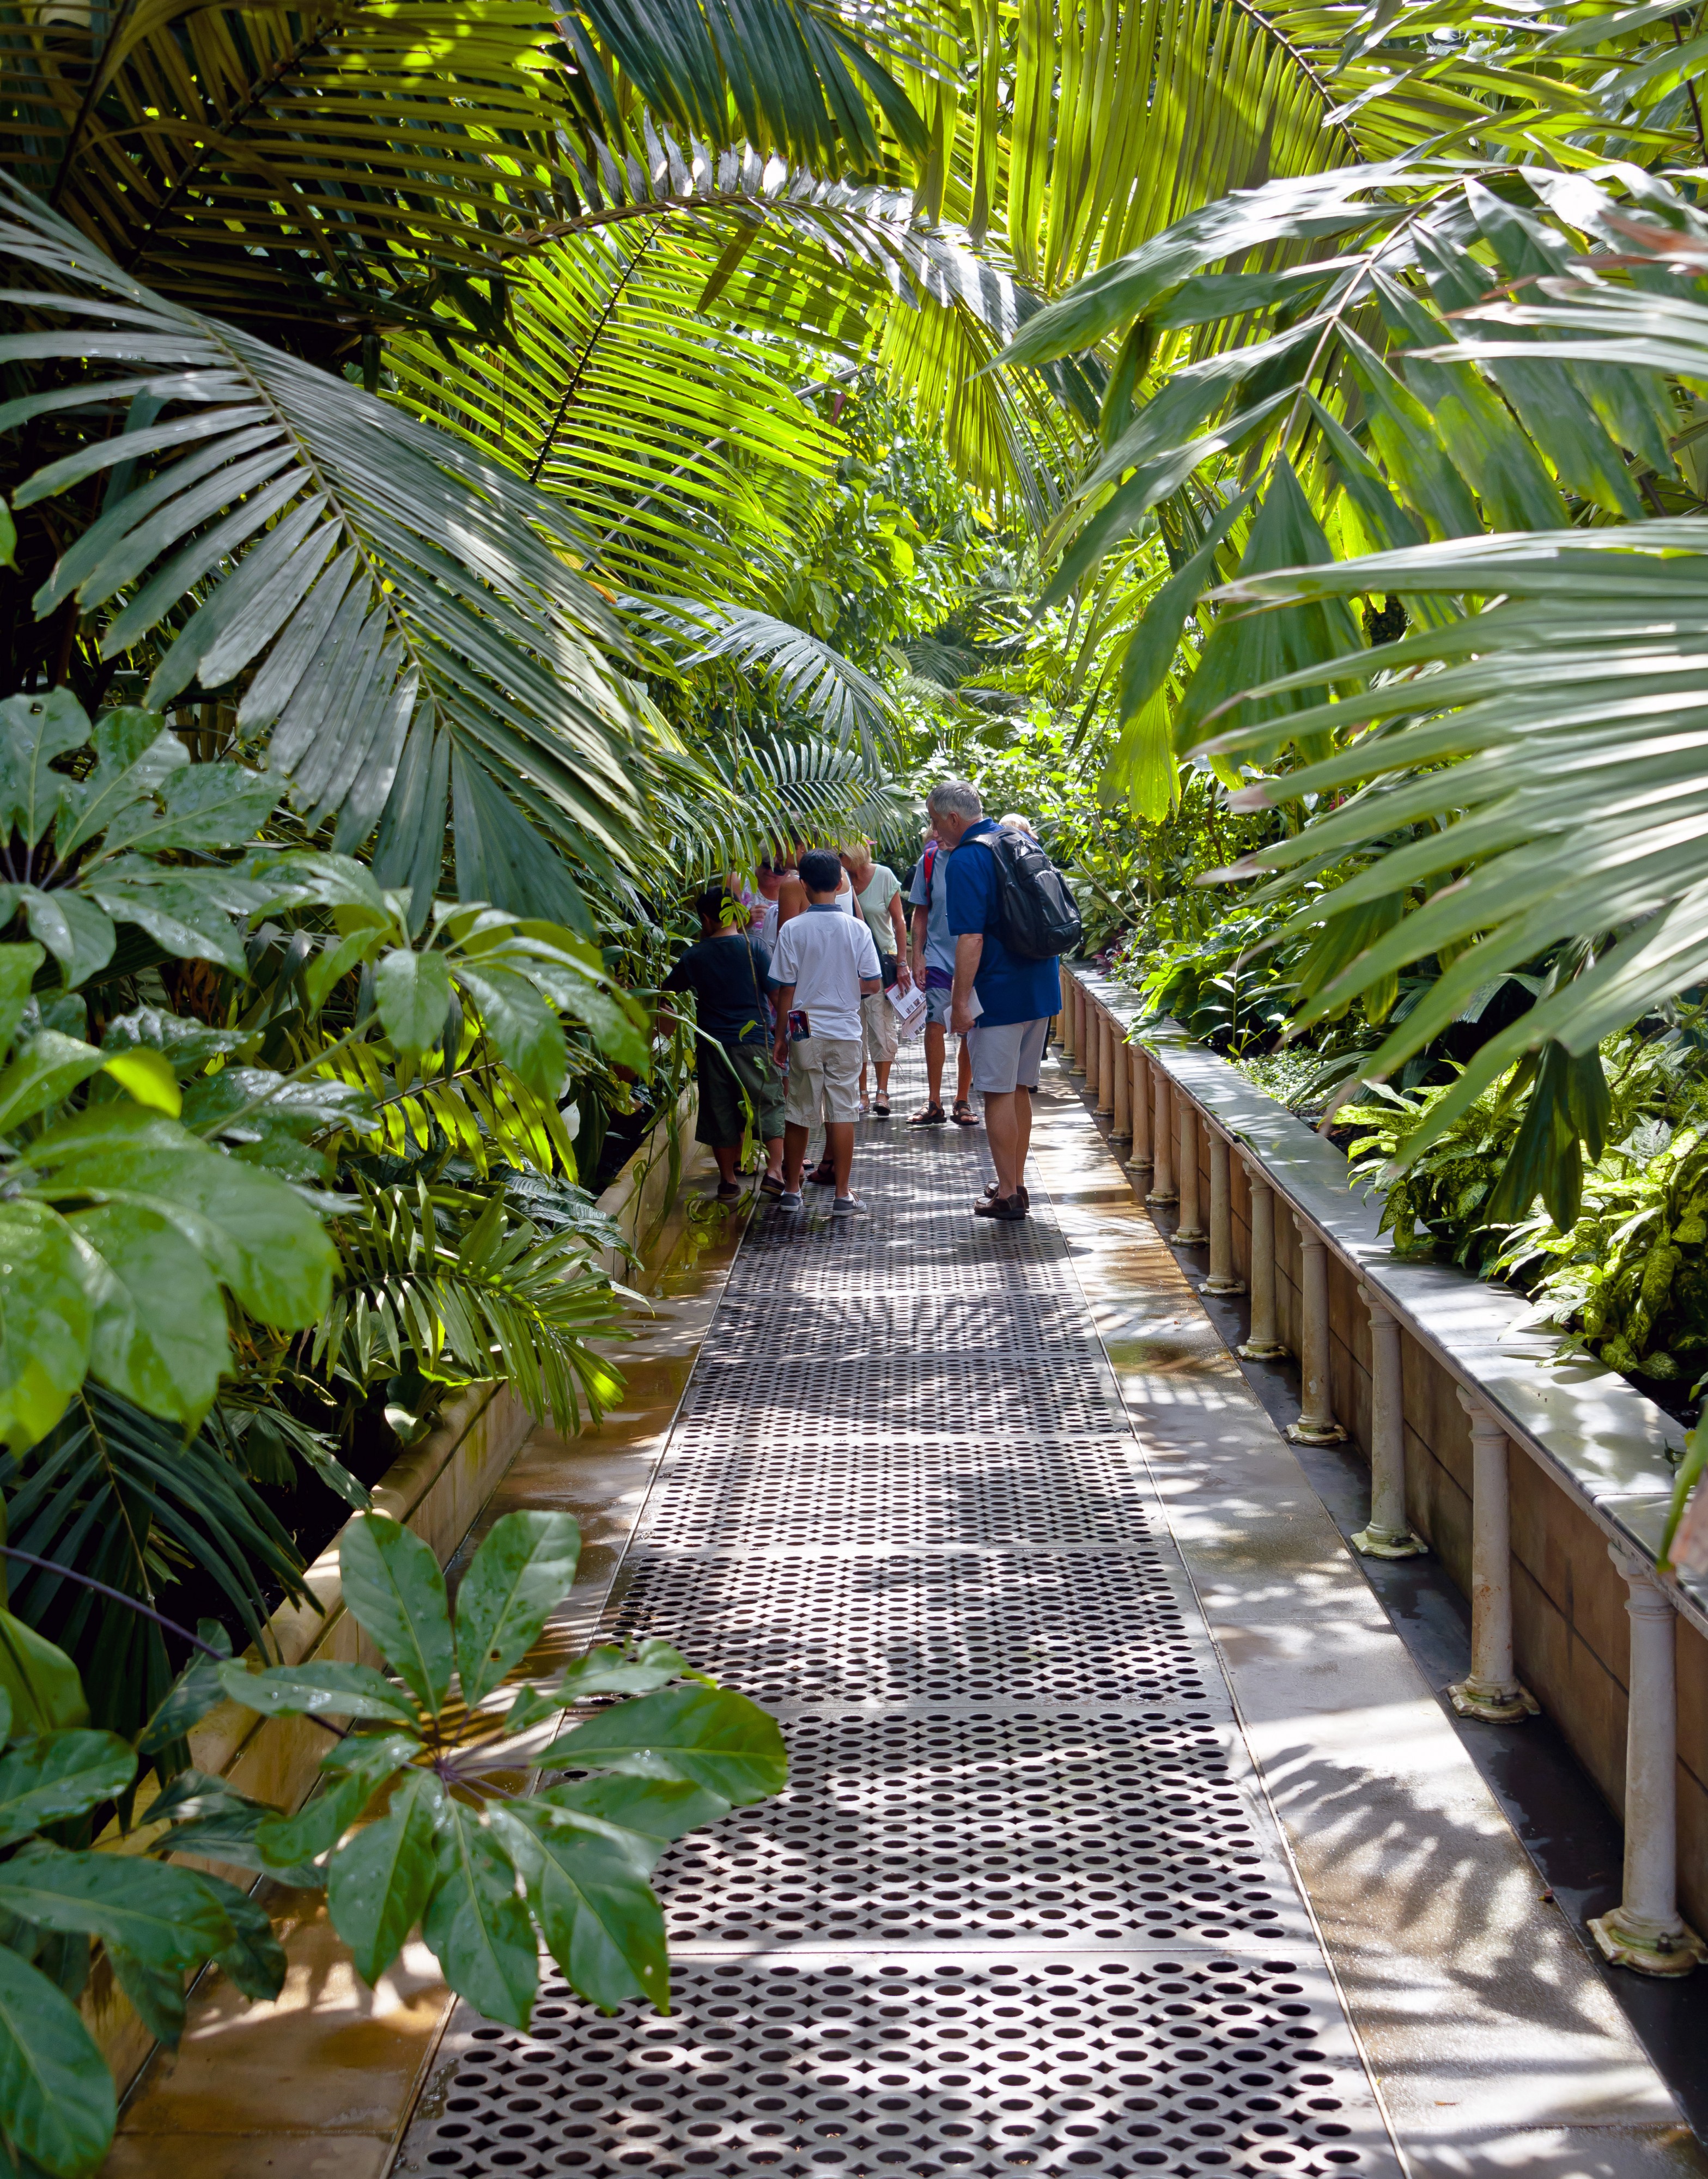 Walkway through palms in Palm House, Kew Gardens